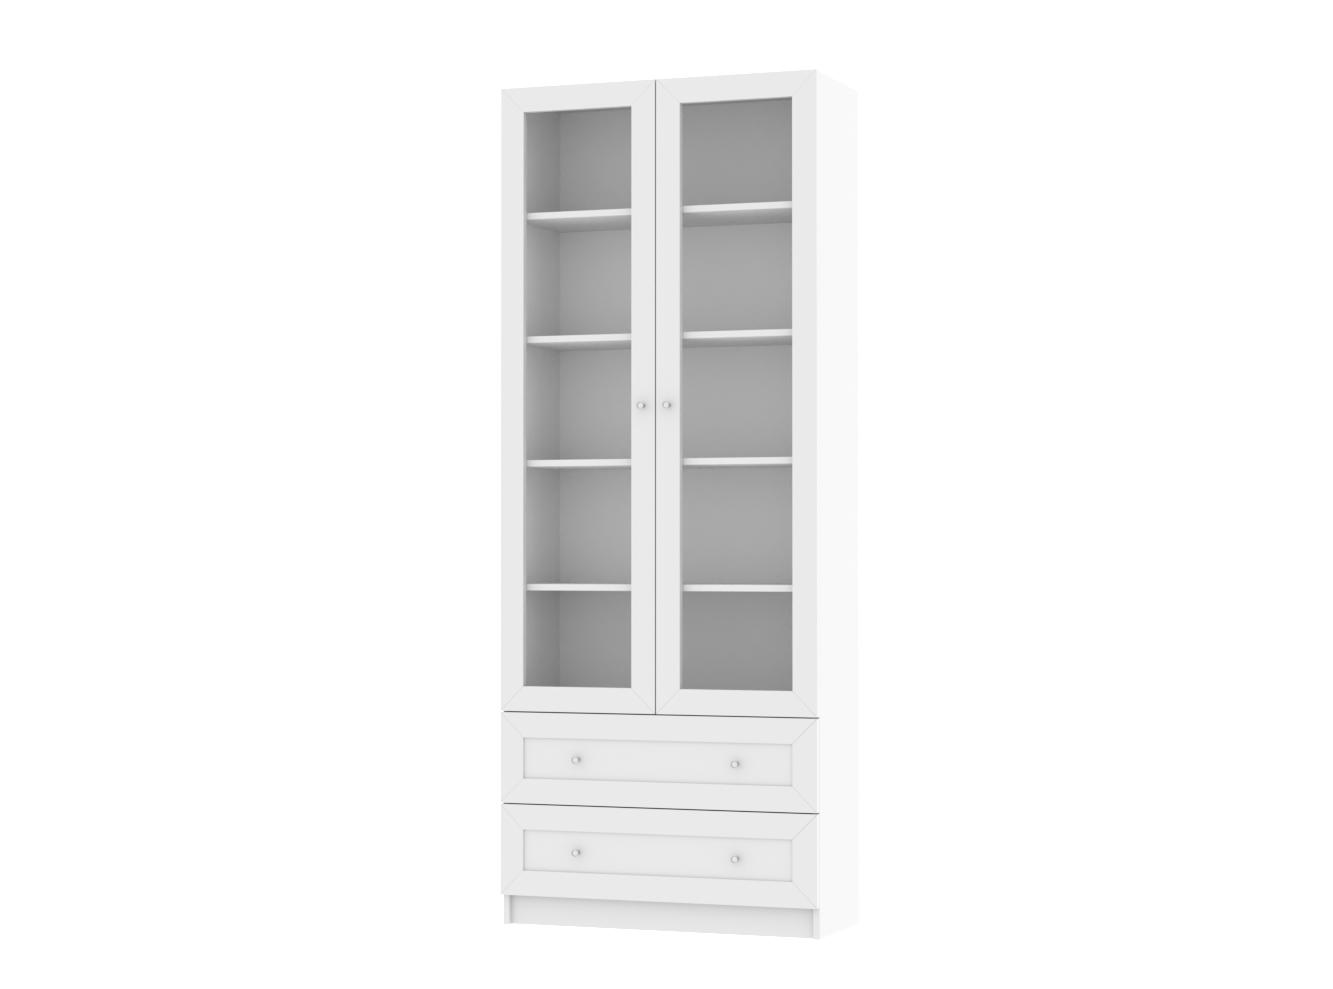 Книжный шкаф Билли 313 white ИКЕА (IKEA) изображение товара